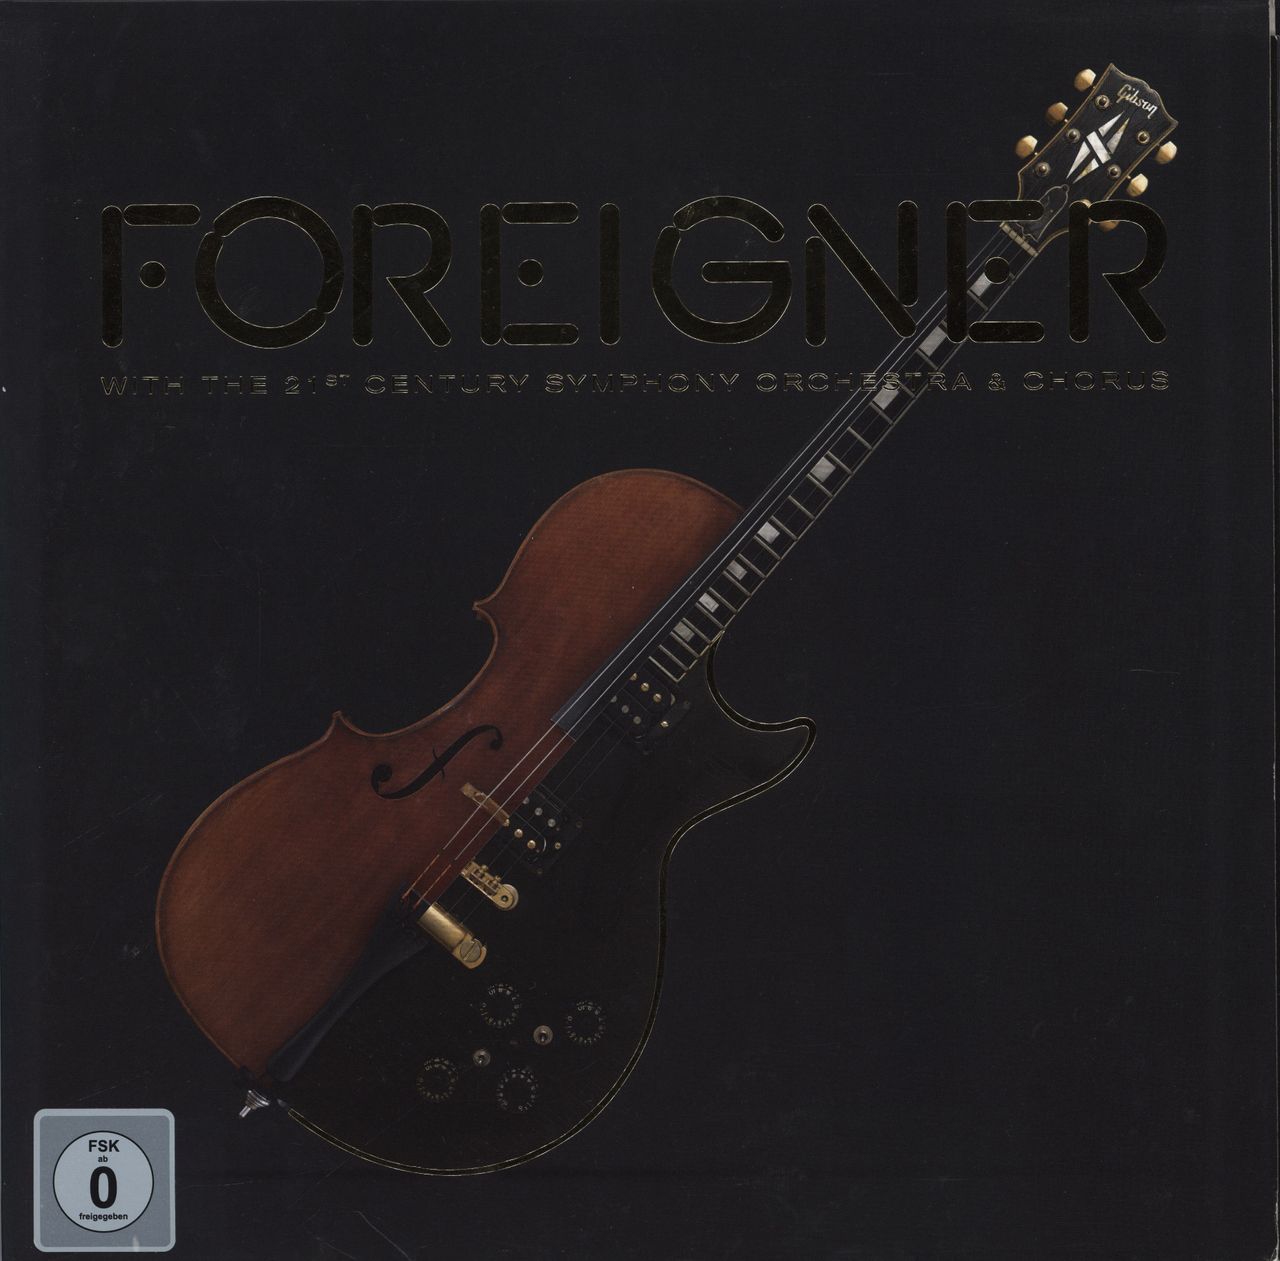 Foreigner Foreigner With The 21st Century Symphony Orchestra & Chorus + DVD German 2-LP vinyl record set (Double LP Album) 0212567EMU